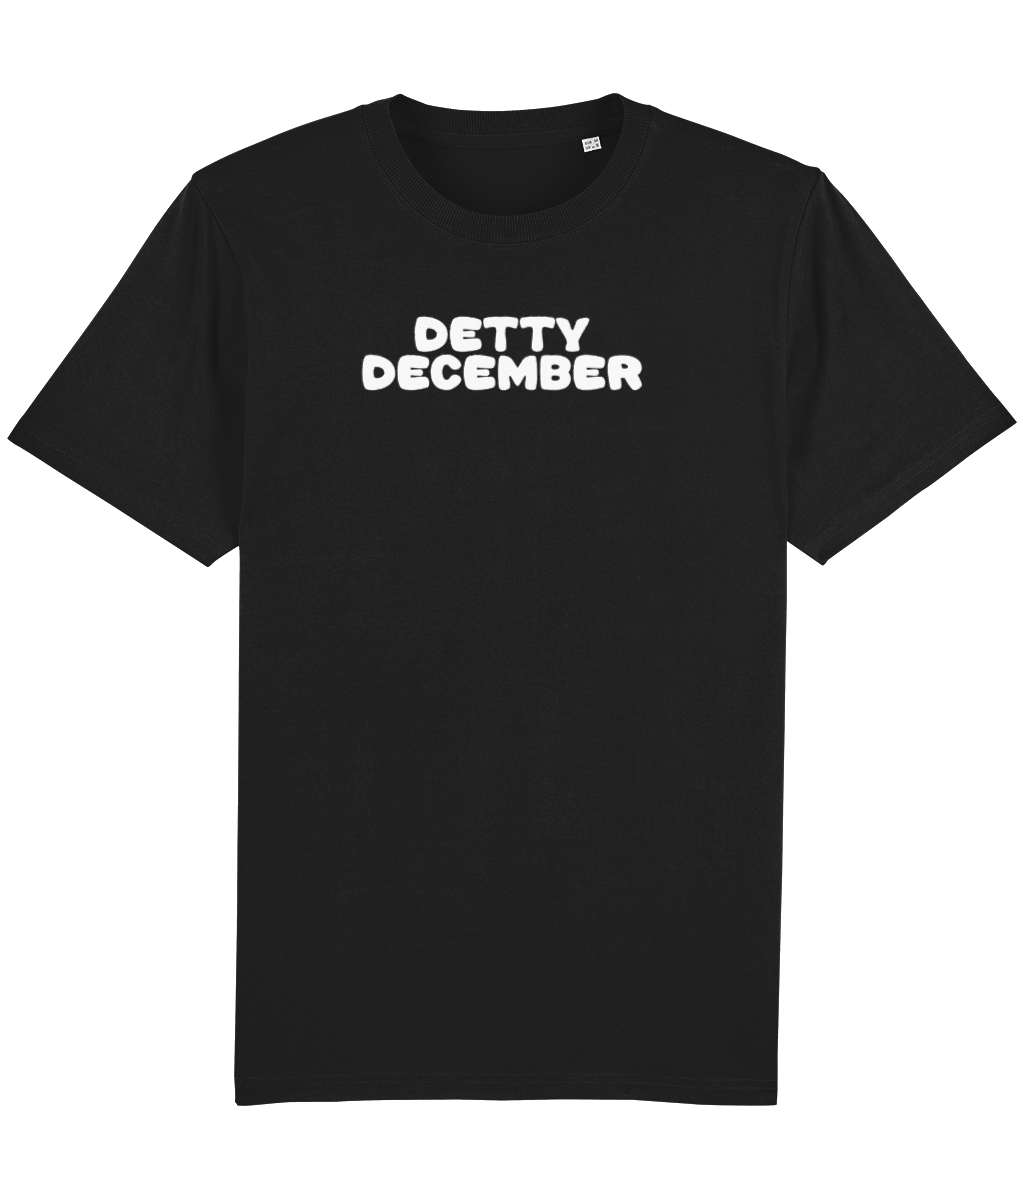 Detty December